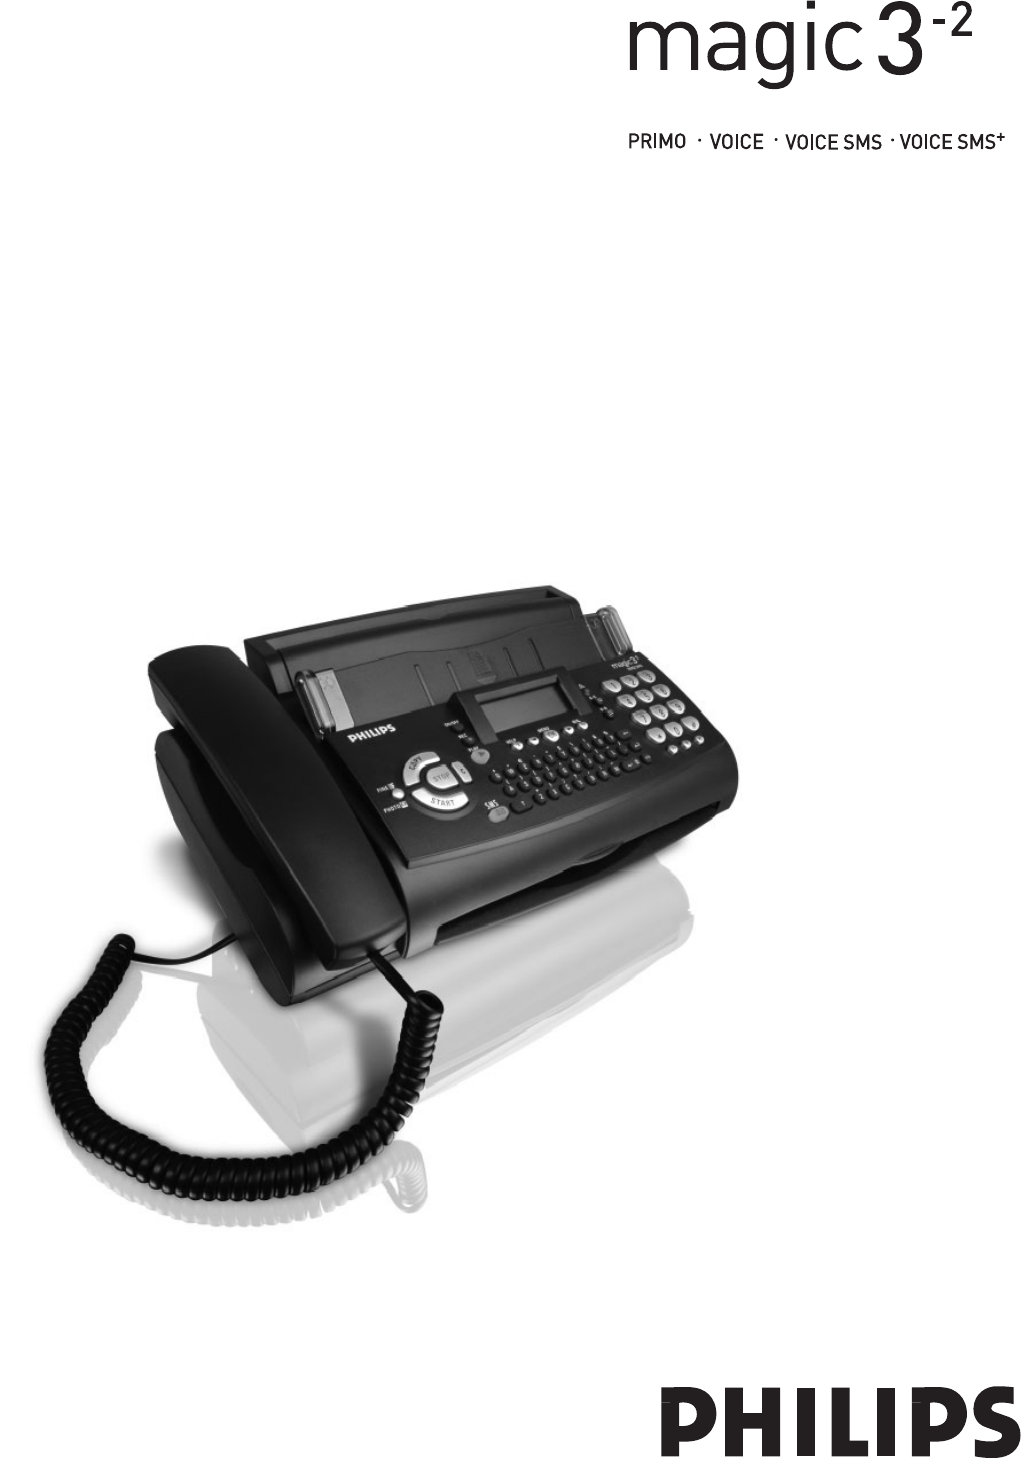 2x Thermo-Transfer-Rolle Alternativ für Philips Magic 3-2 Voice Dect SMS komp 